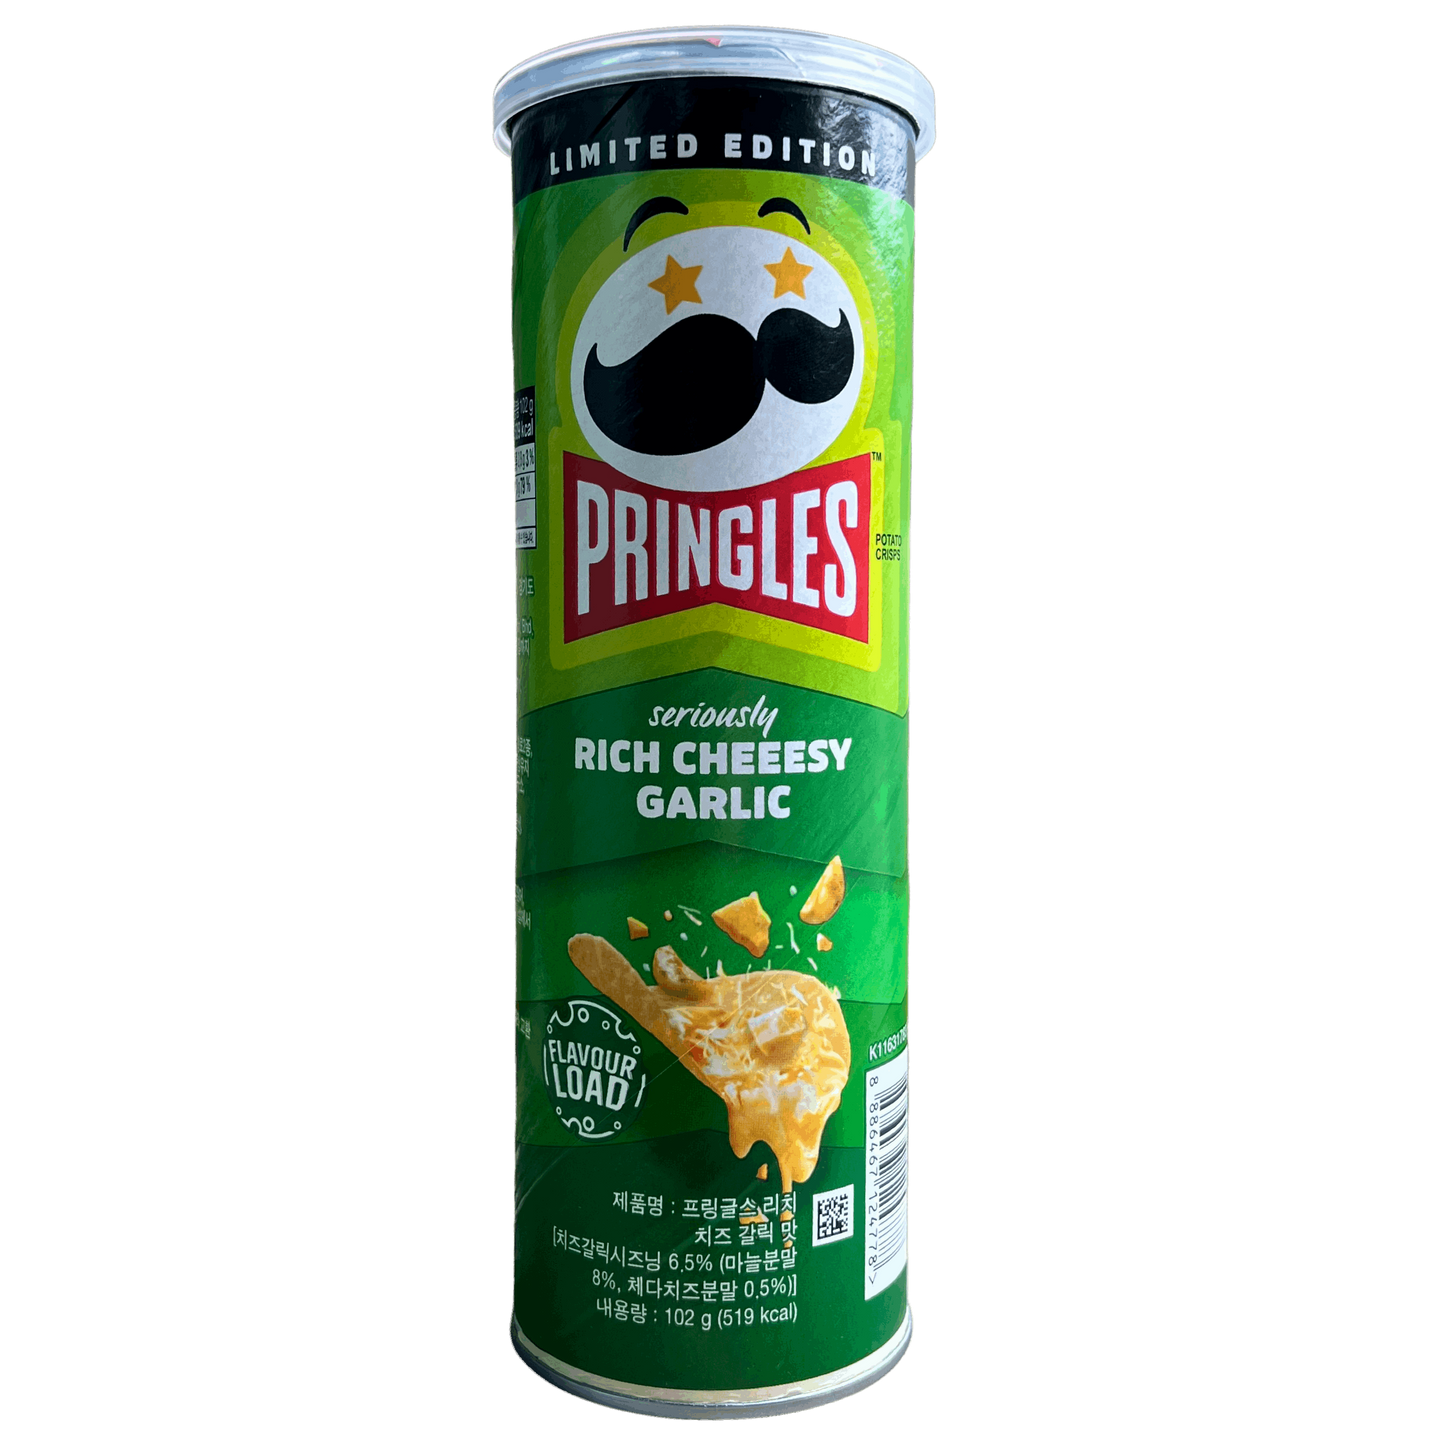 Pringles Seriously Rich Cheeesy Garlic Potato Chips Damaski.com